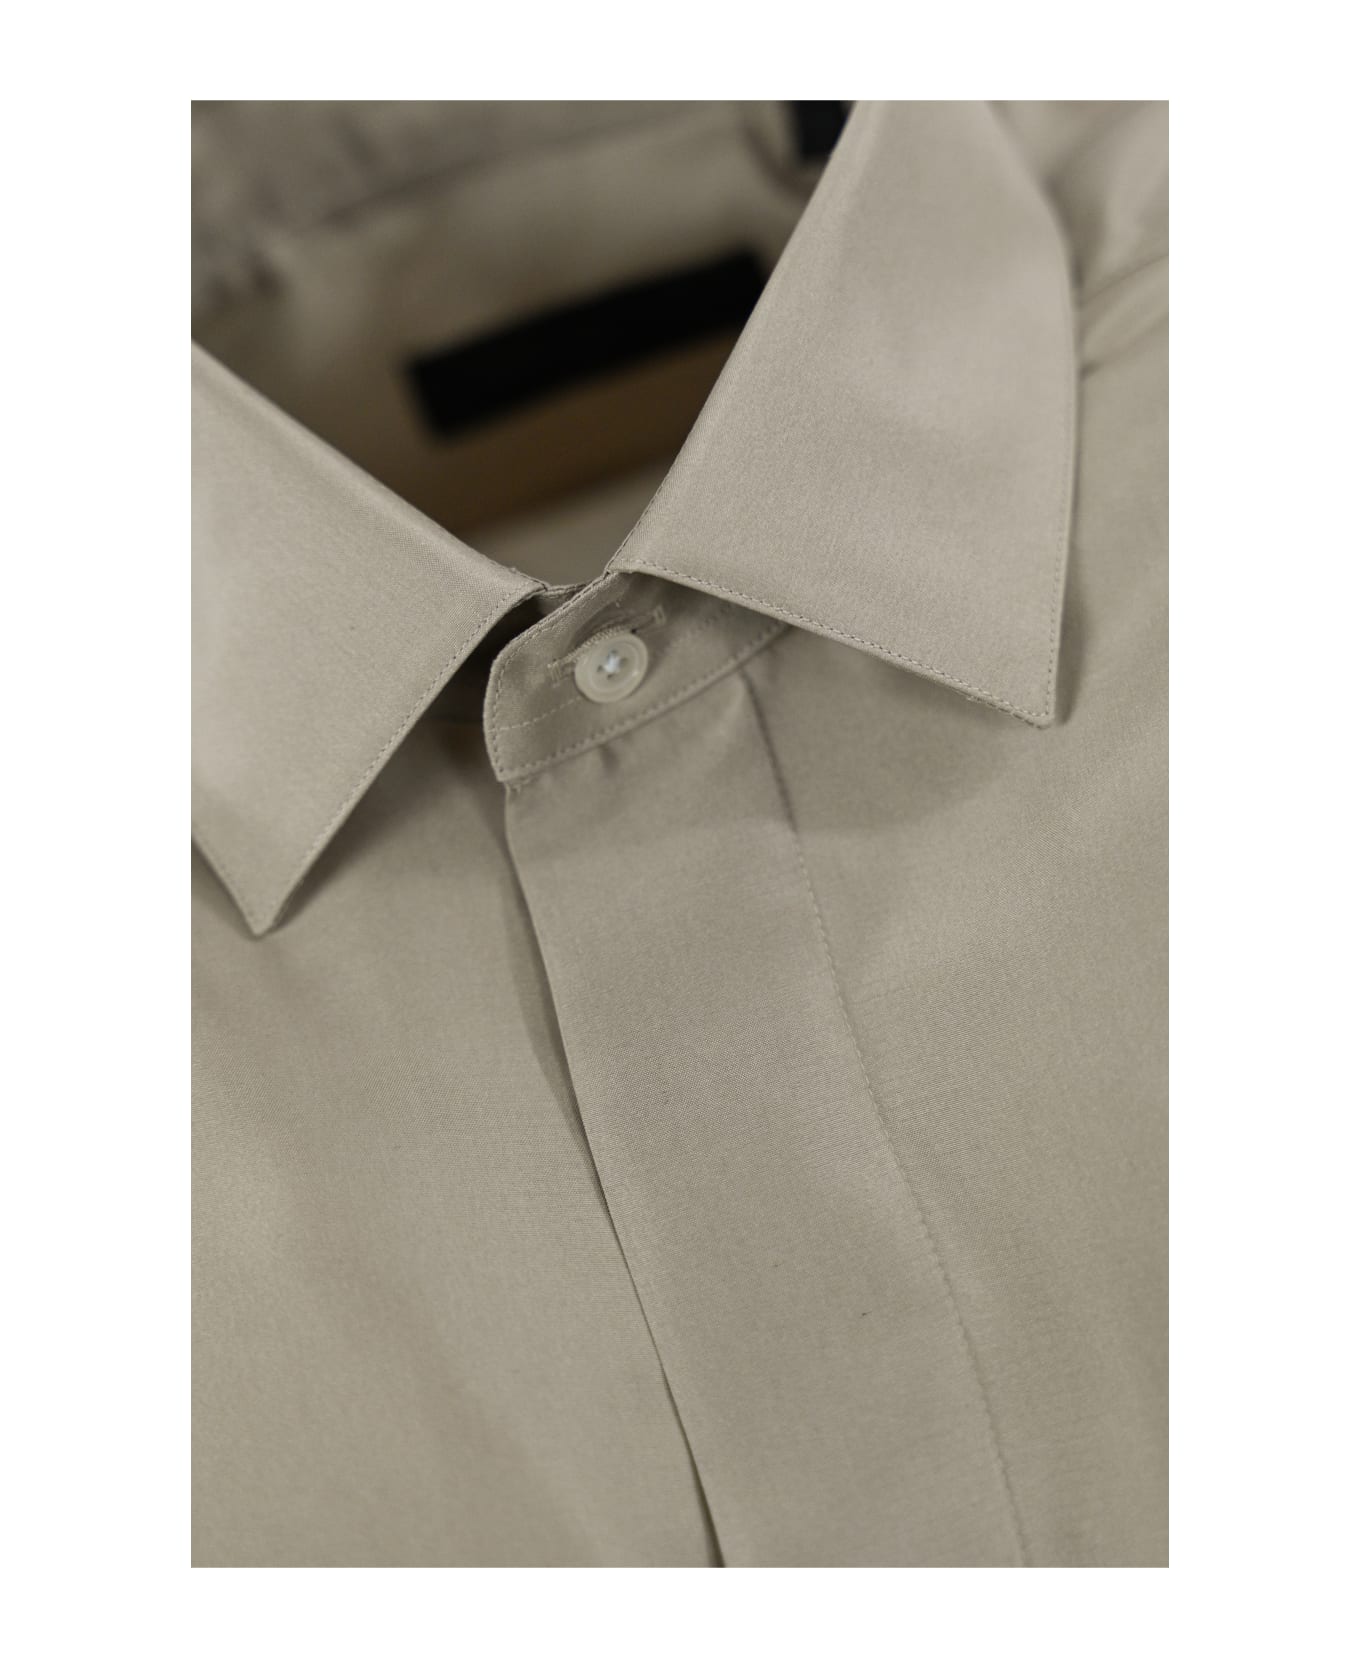 Corneliani Silk Shirt - Beige